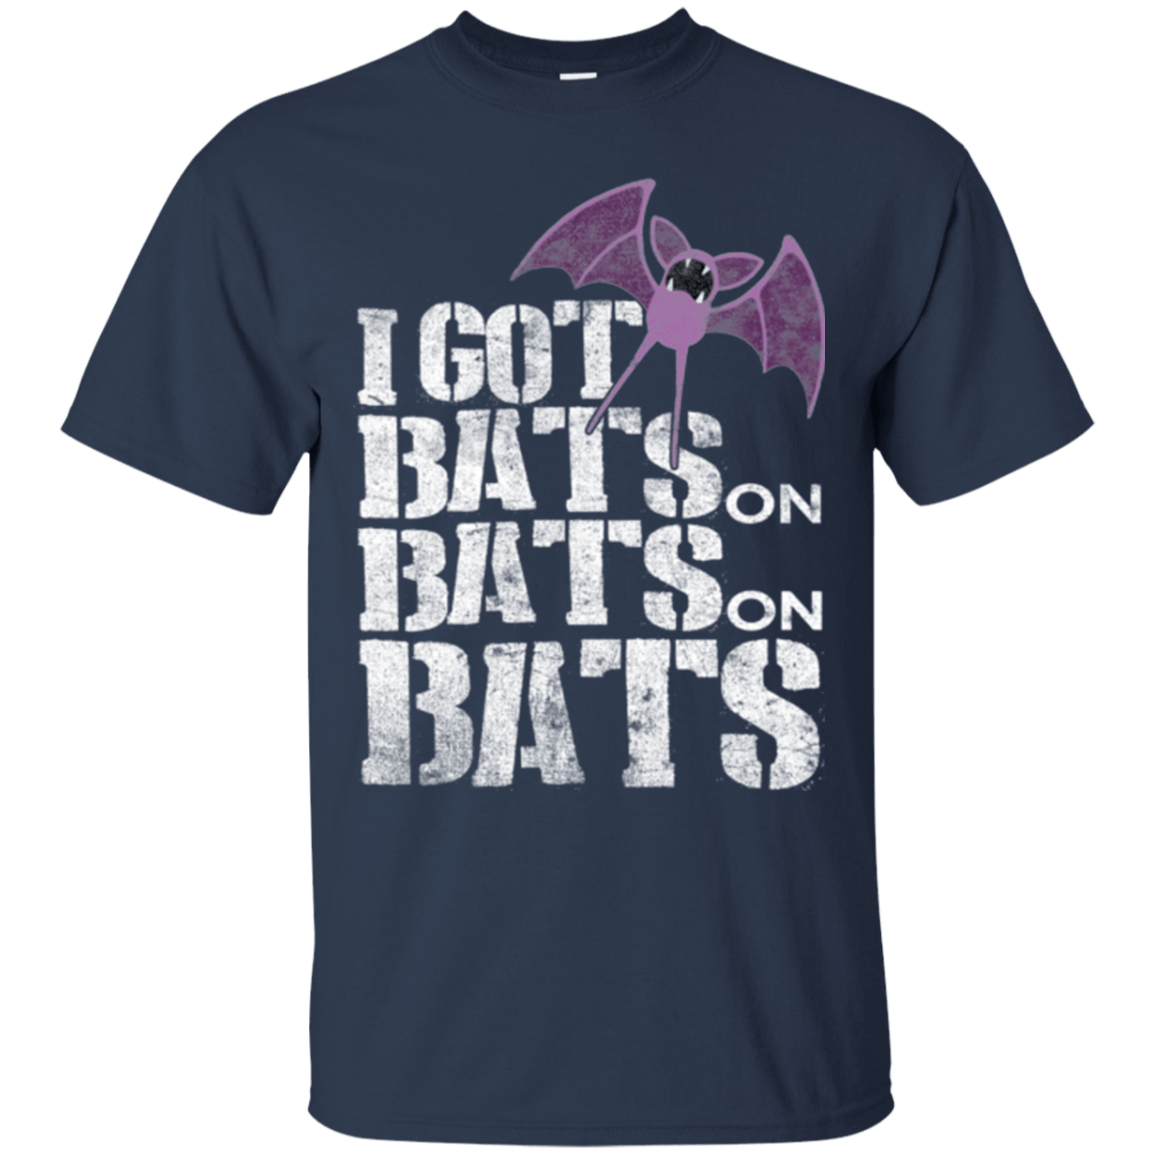 T-Shirts Navy / Small Bats on Bats on Bats T-Shirt